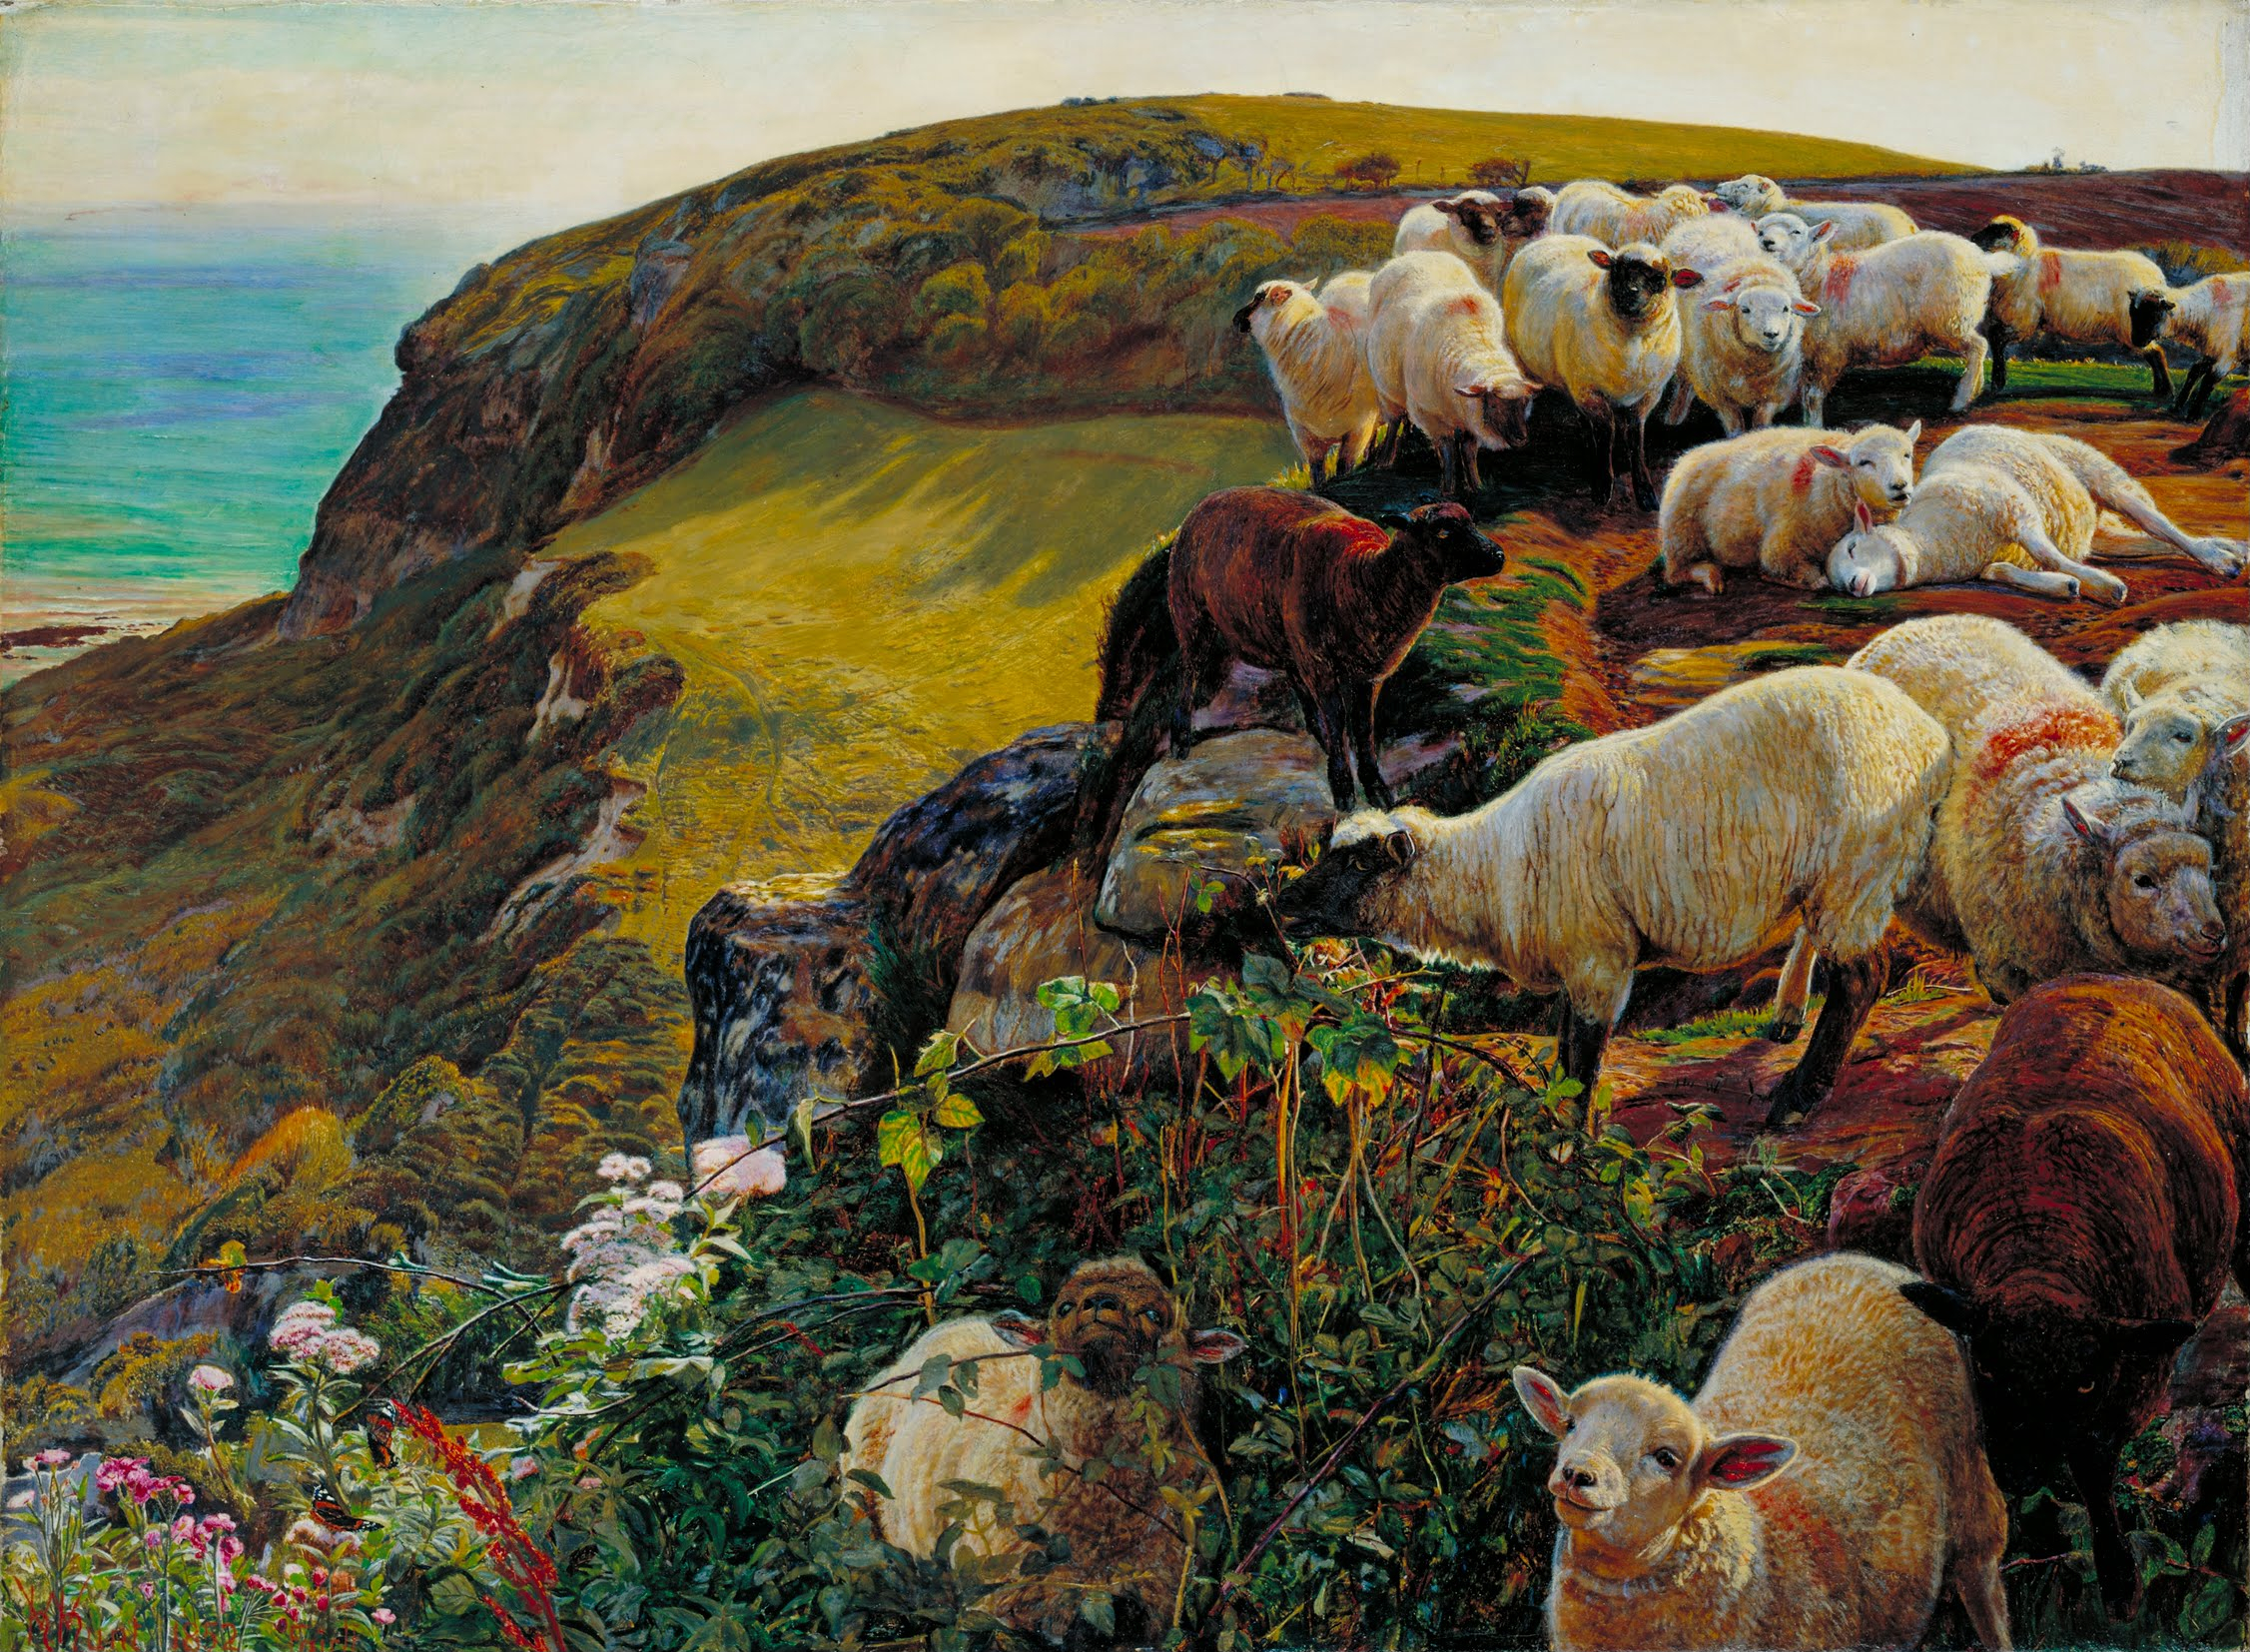 Onze Engelse kusten, 1852 (Afgedwaalde schapen) by William Holman Hunt - 1852 - 58,4 x 43,2 